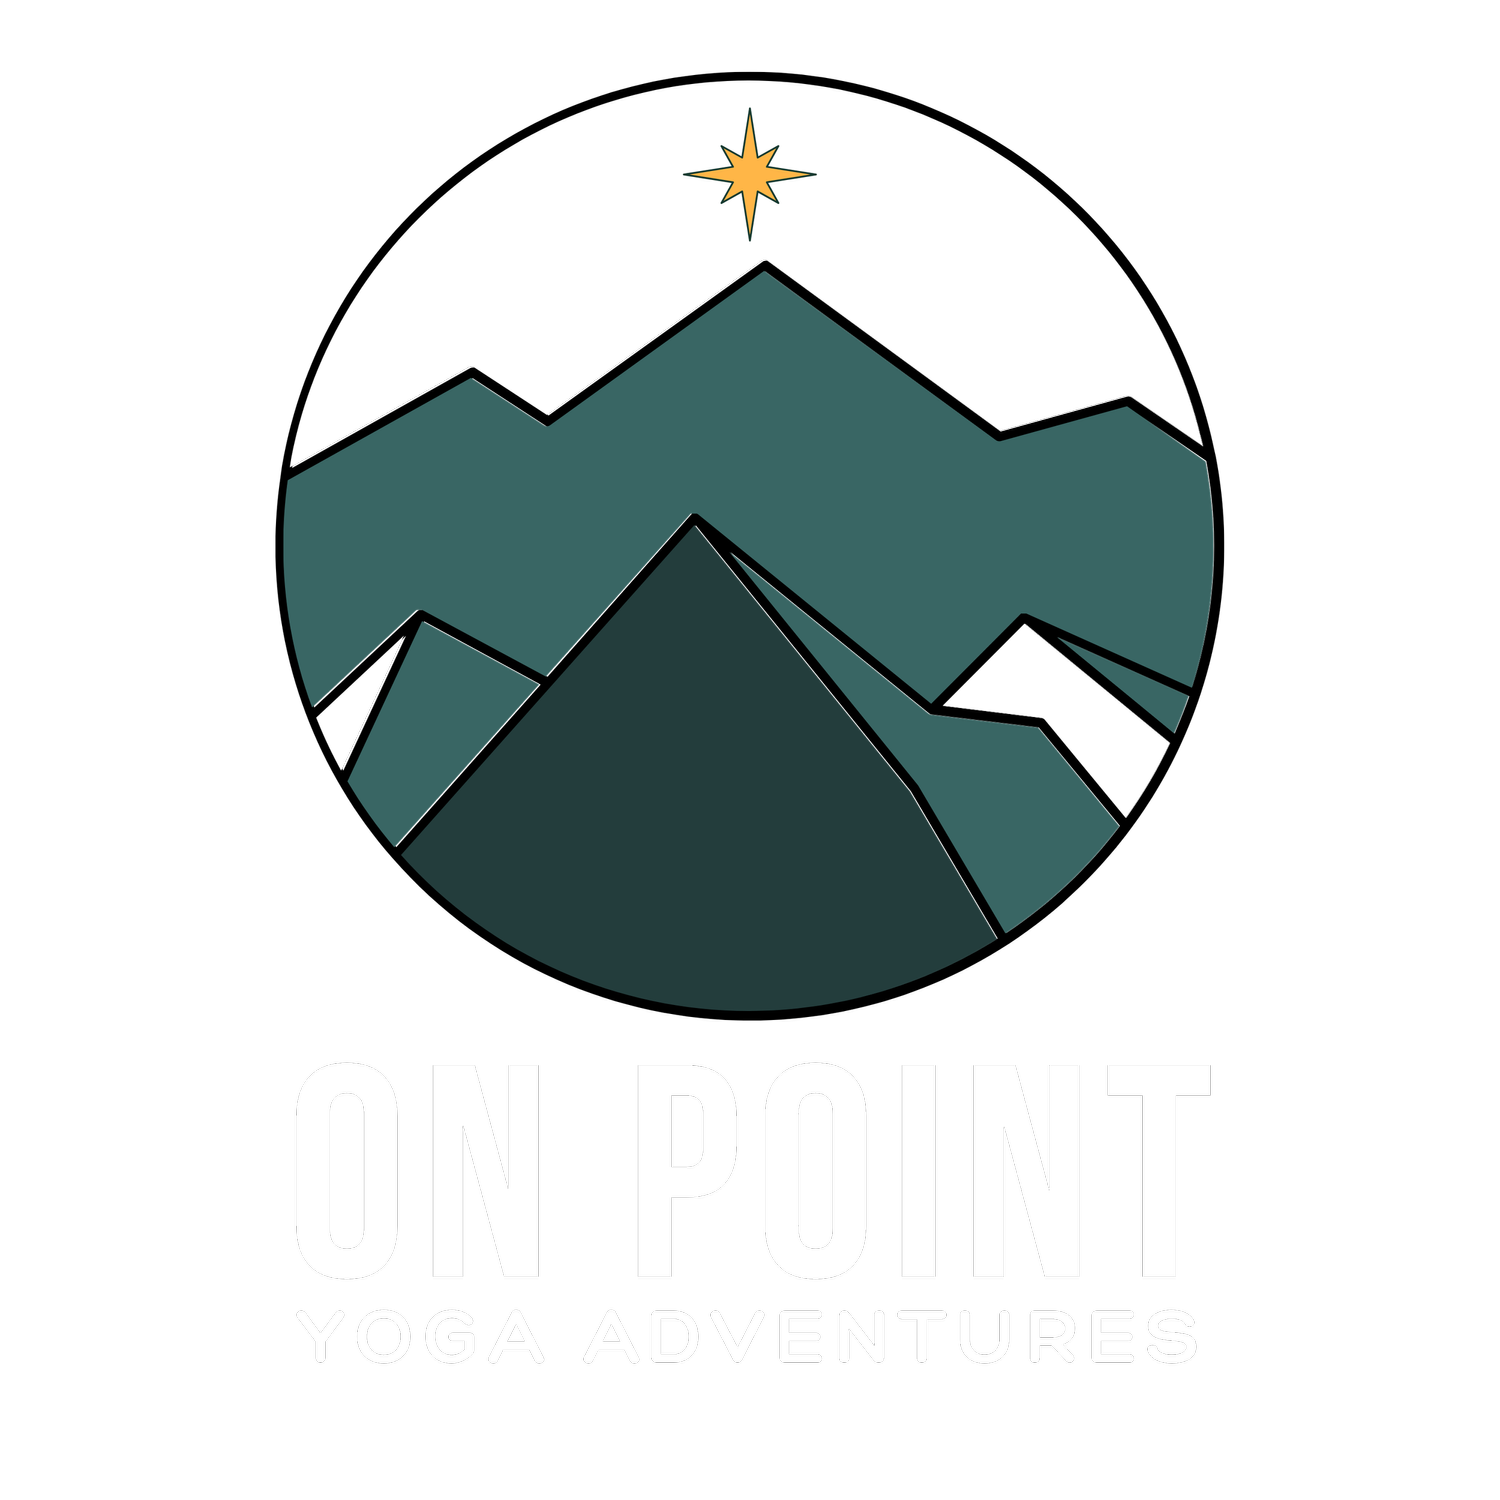 On Point Yoga Adventures